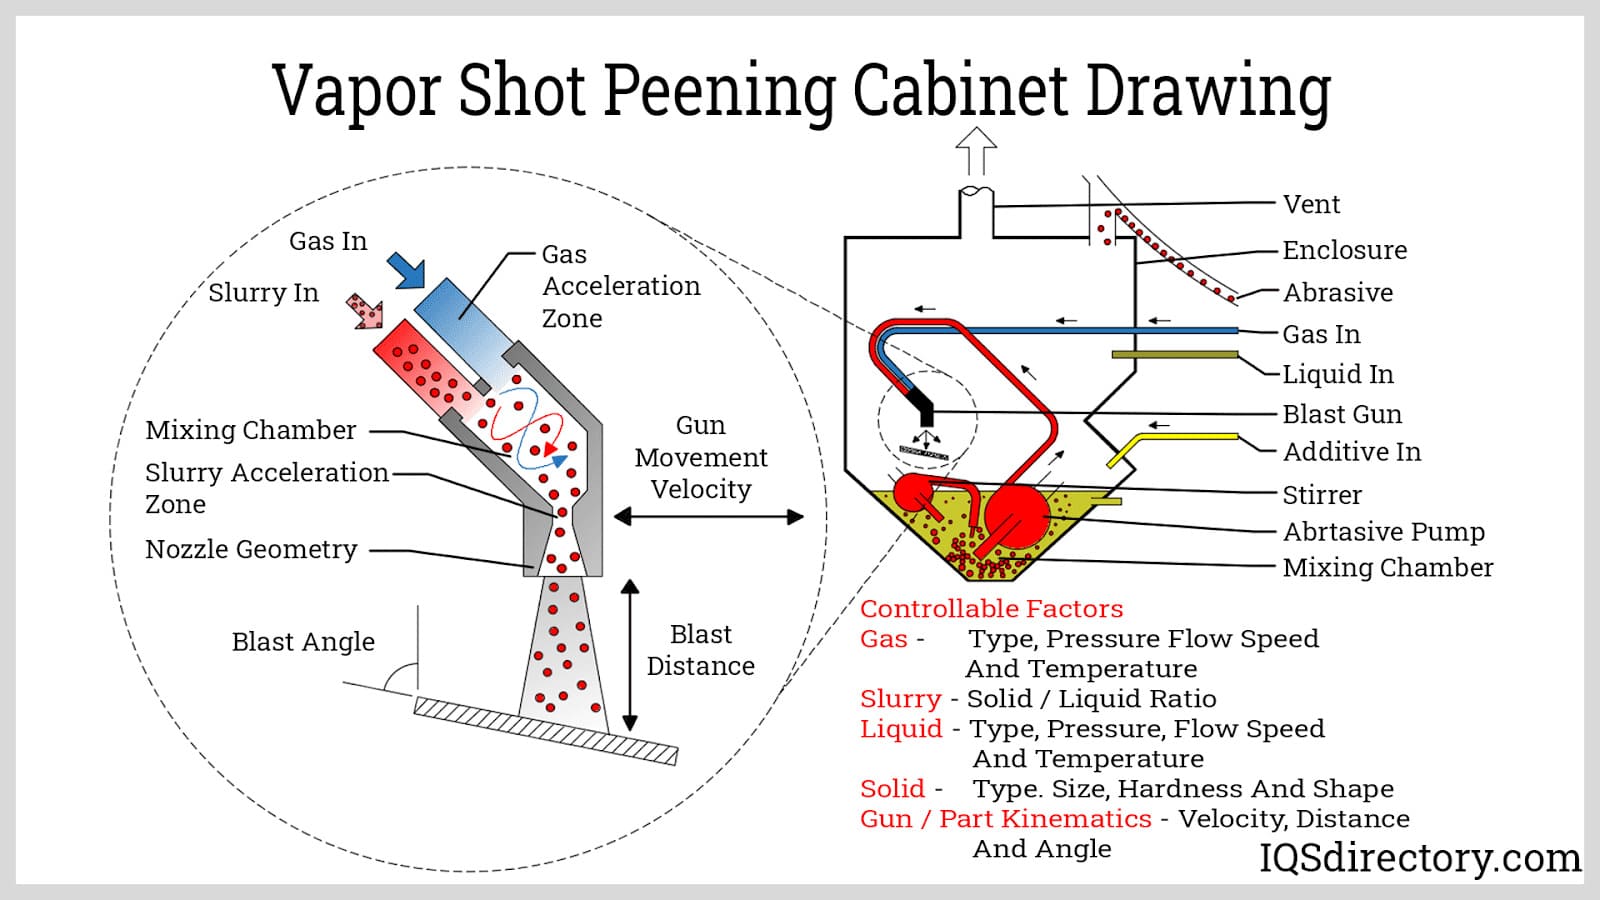 Vapor Shot Peening Cabinet Drawing